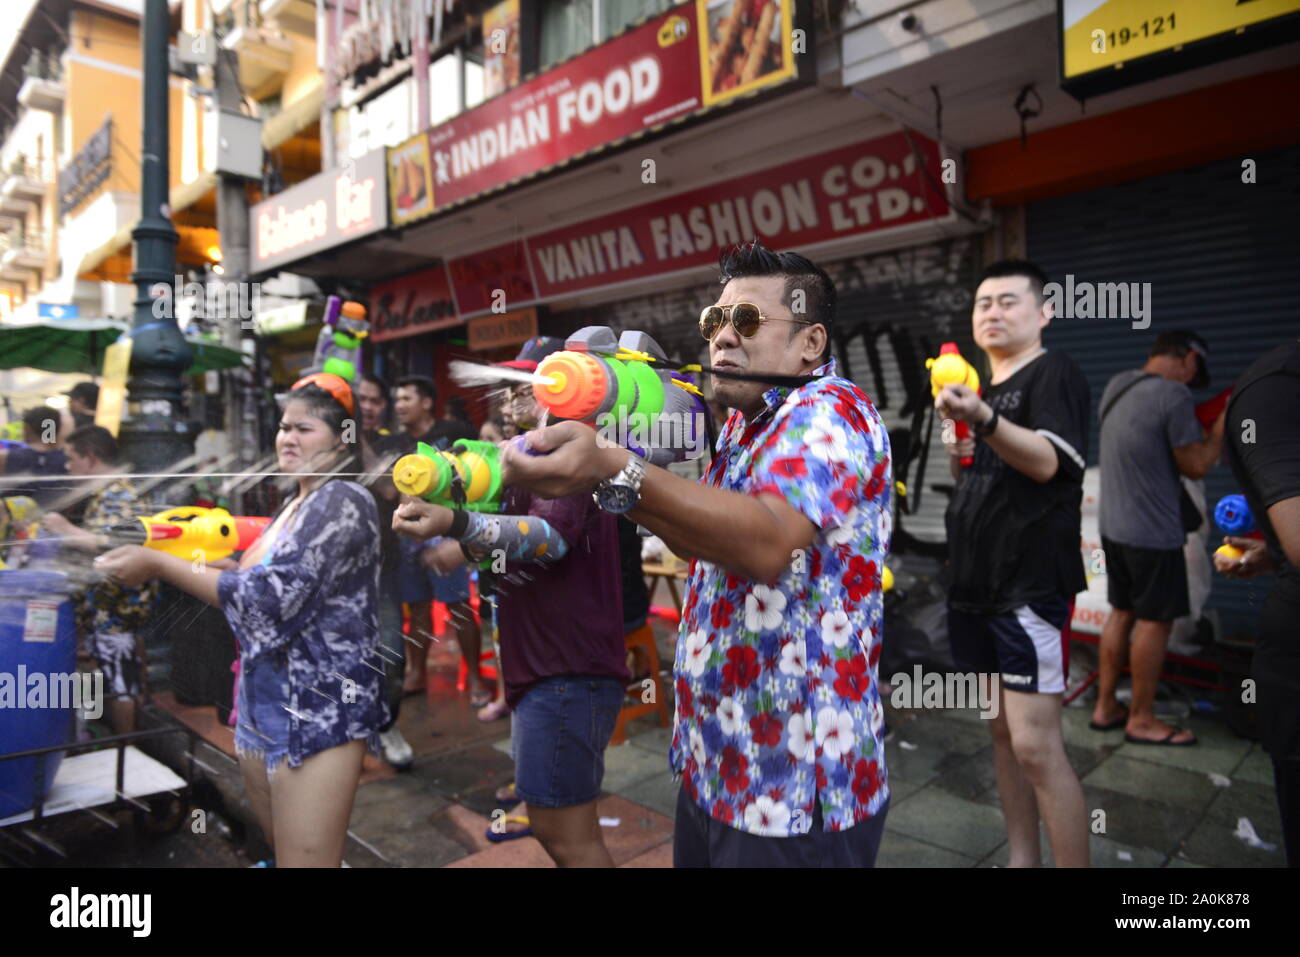 People celebrating the Songkran festival Stock Photo